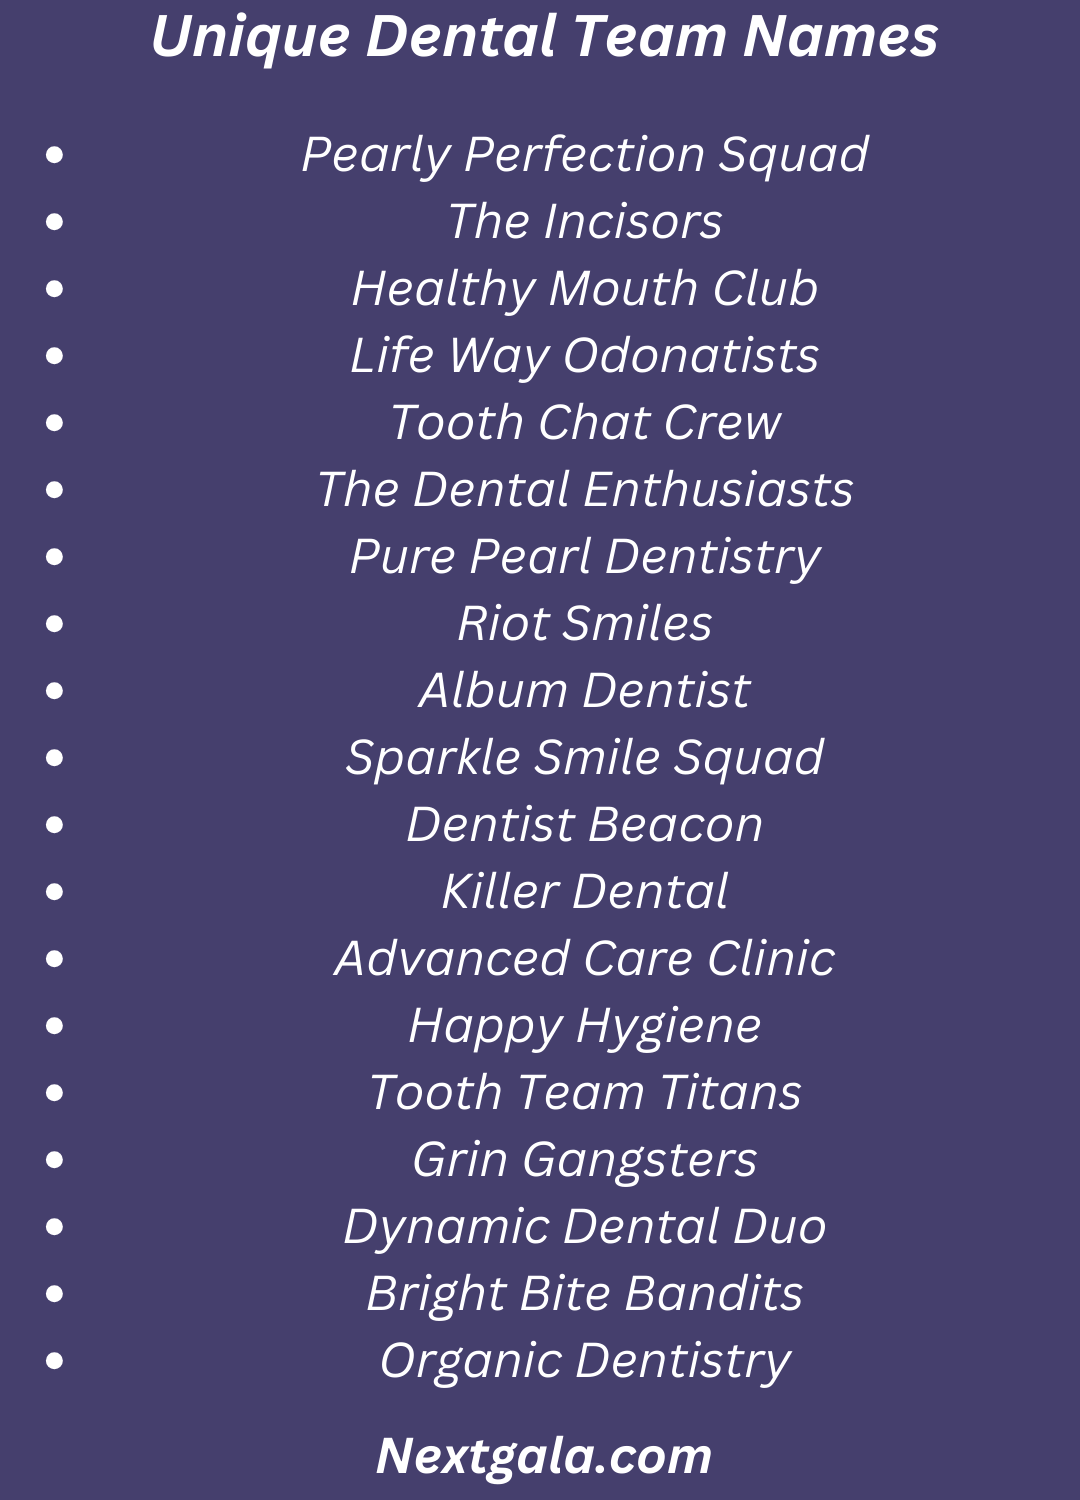 Dental Team Names